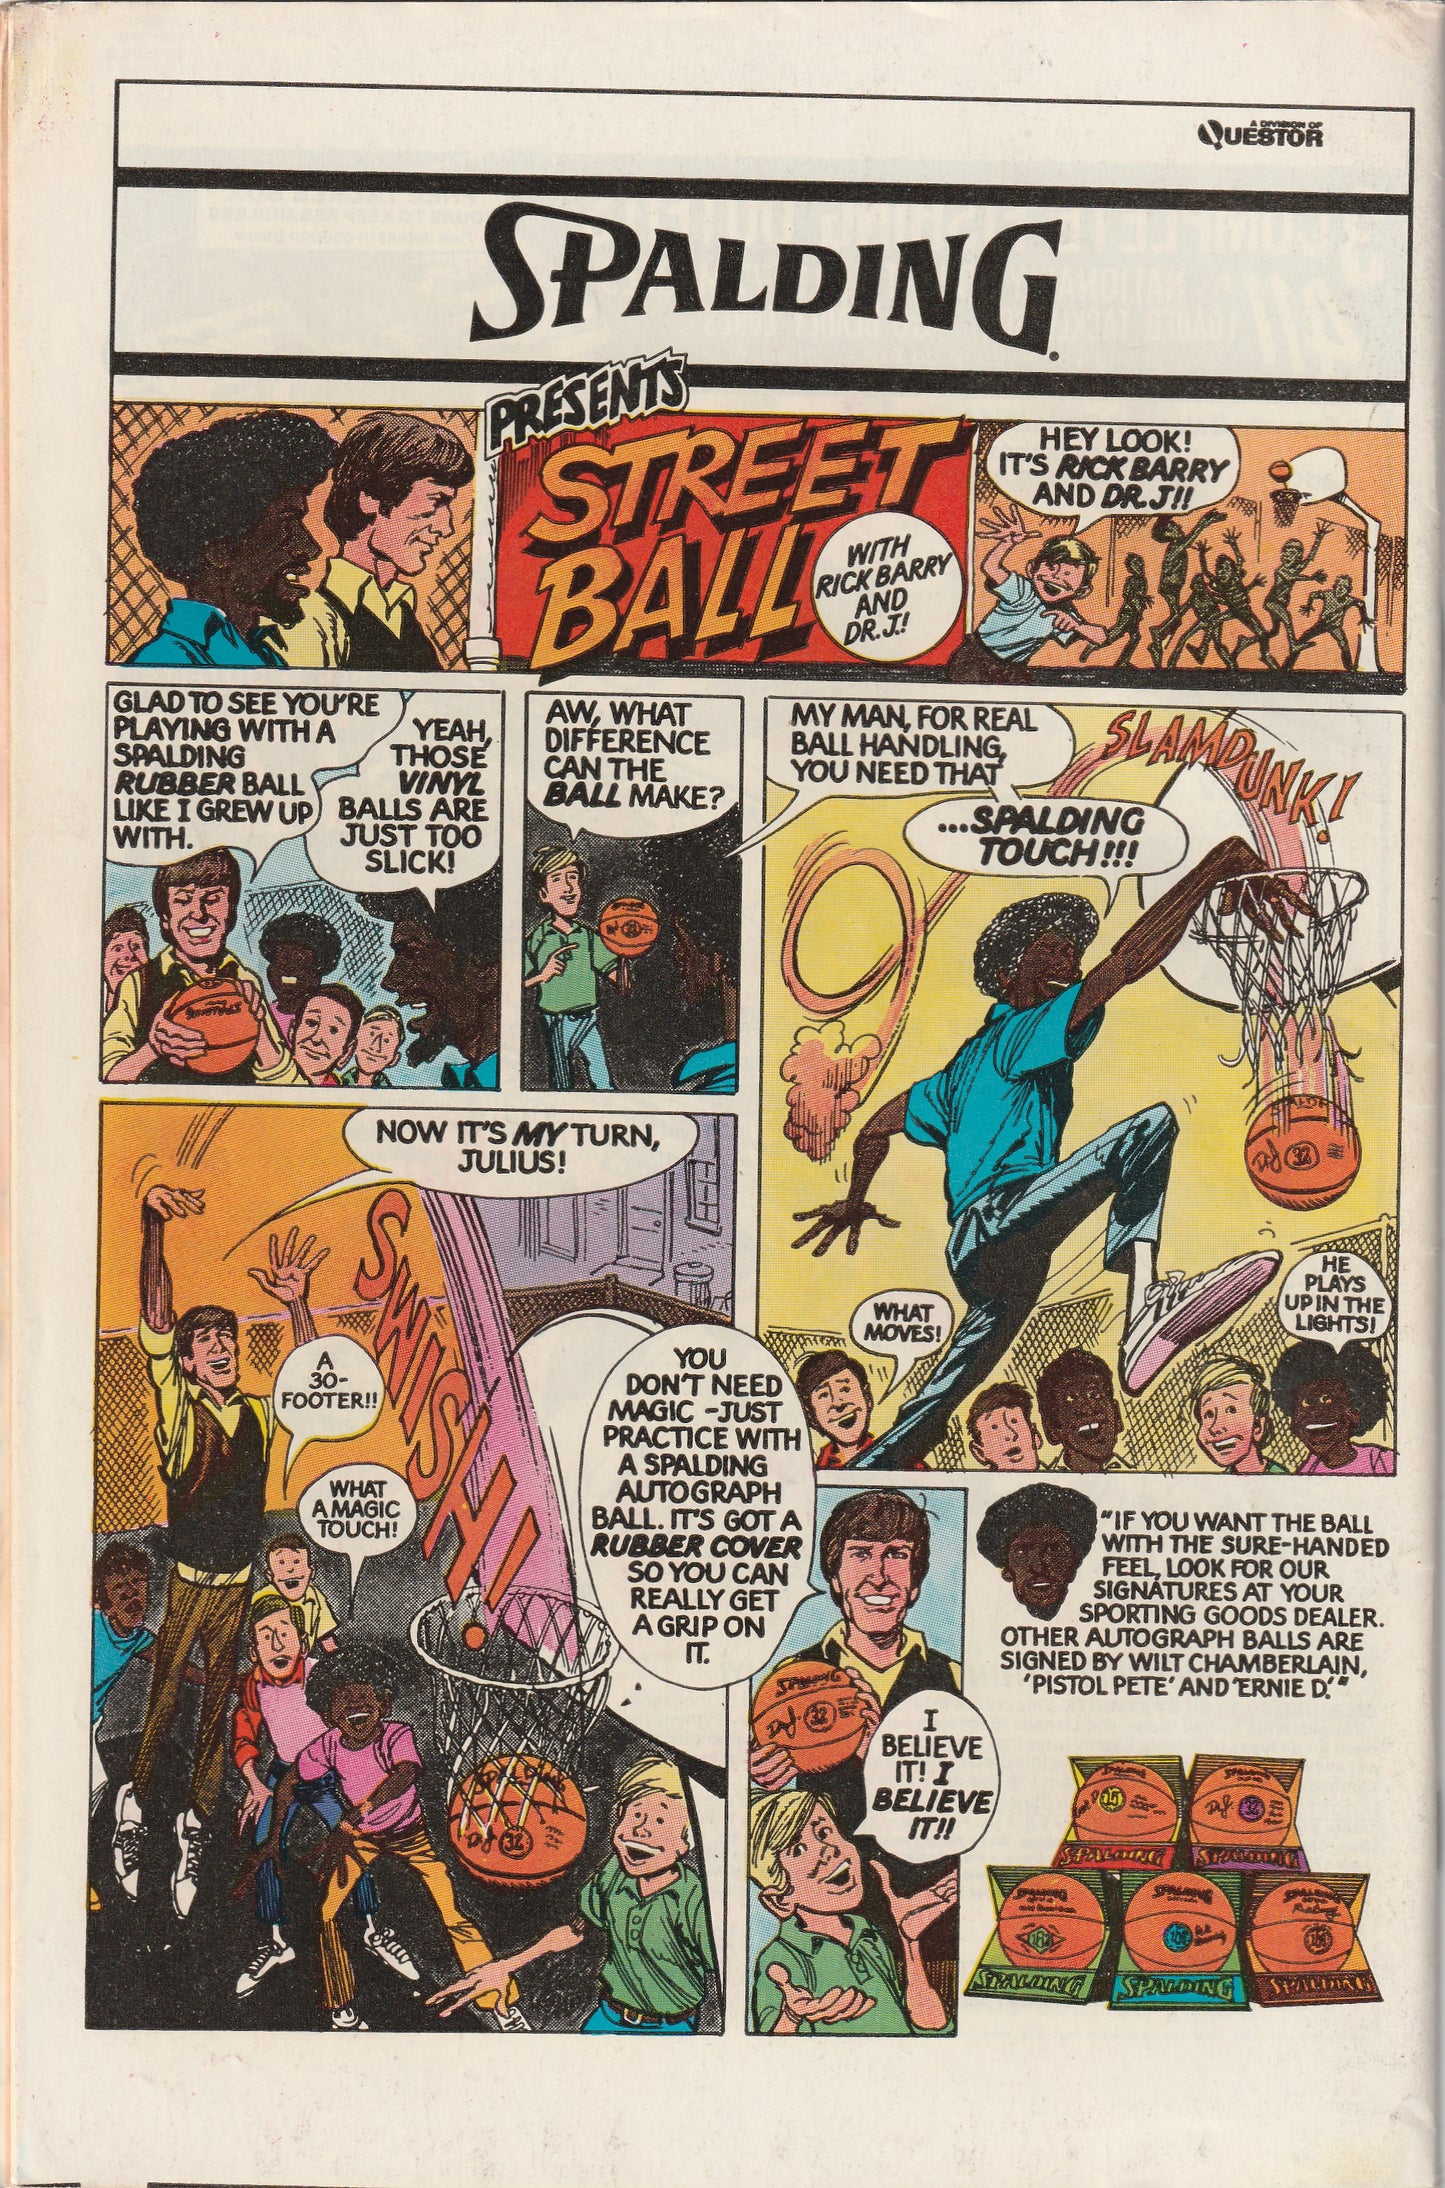 Amazing Spider-Man #171 (1977) - Nova Appearance